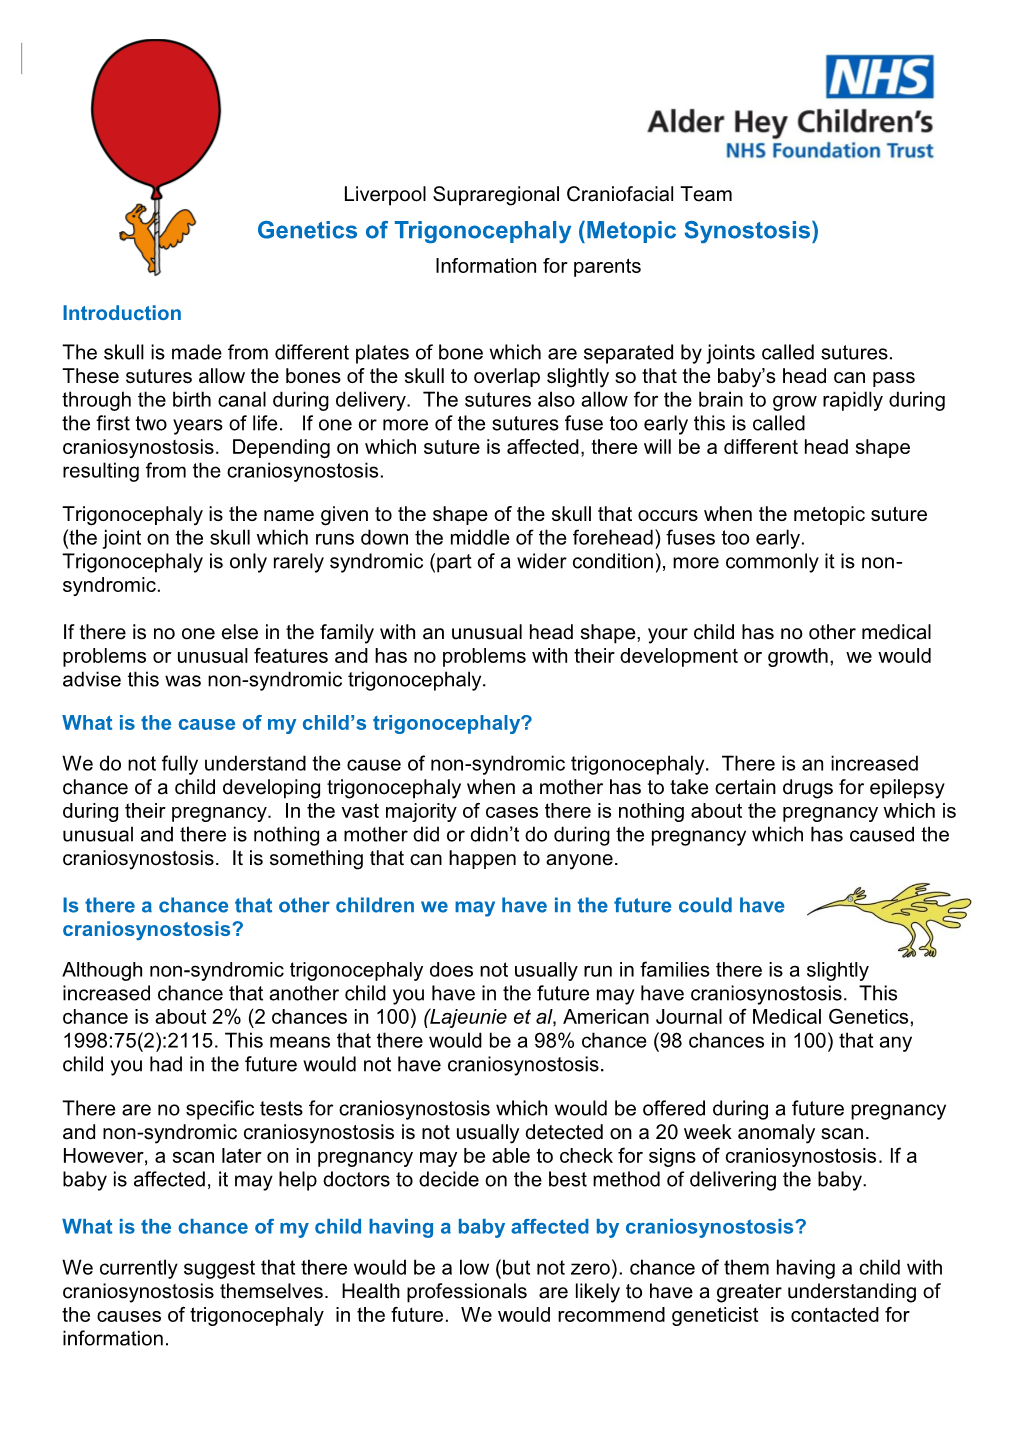 Genetics of Trigonocephaly (Metopic Synostosis) Information for Parents